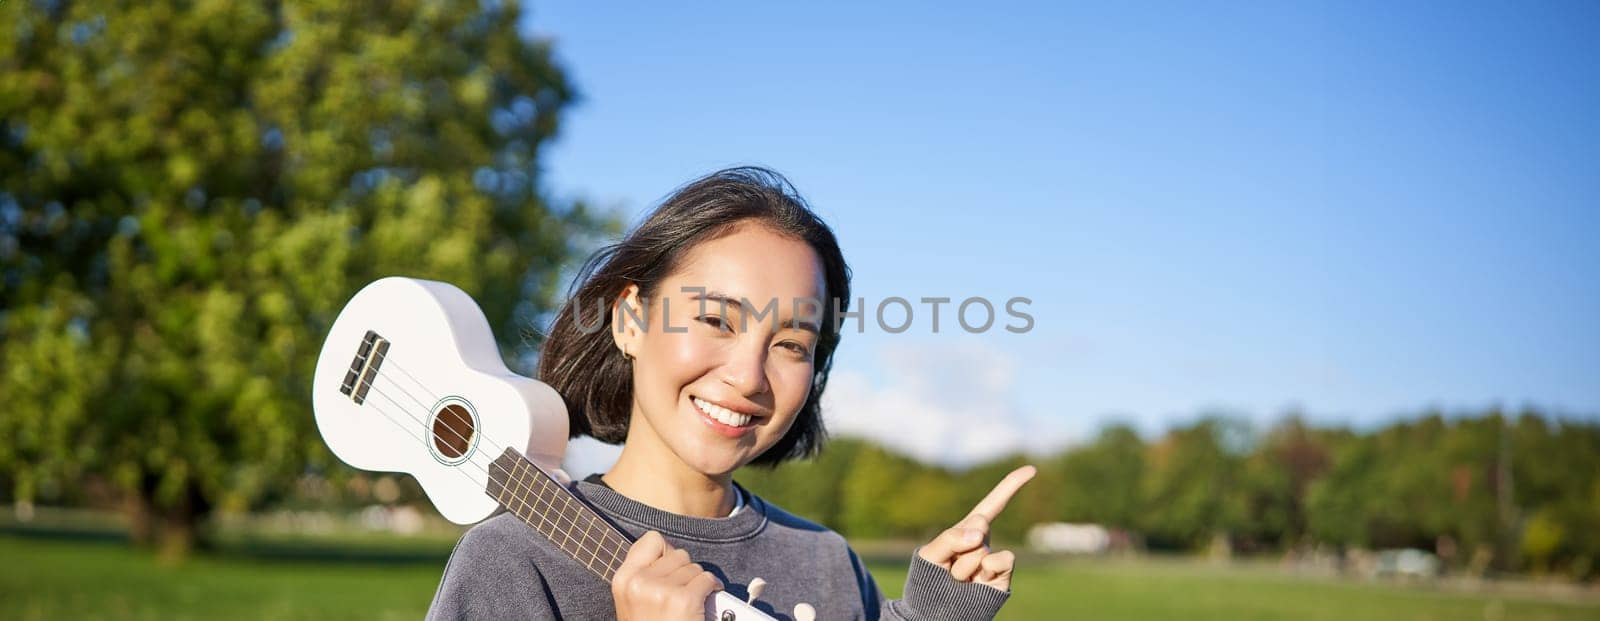 Portrait of asian smiling girl, holding ukulele over shoulder, pointing finger at copy space, banner or logo by Benzoix